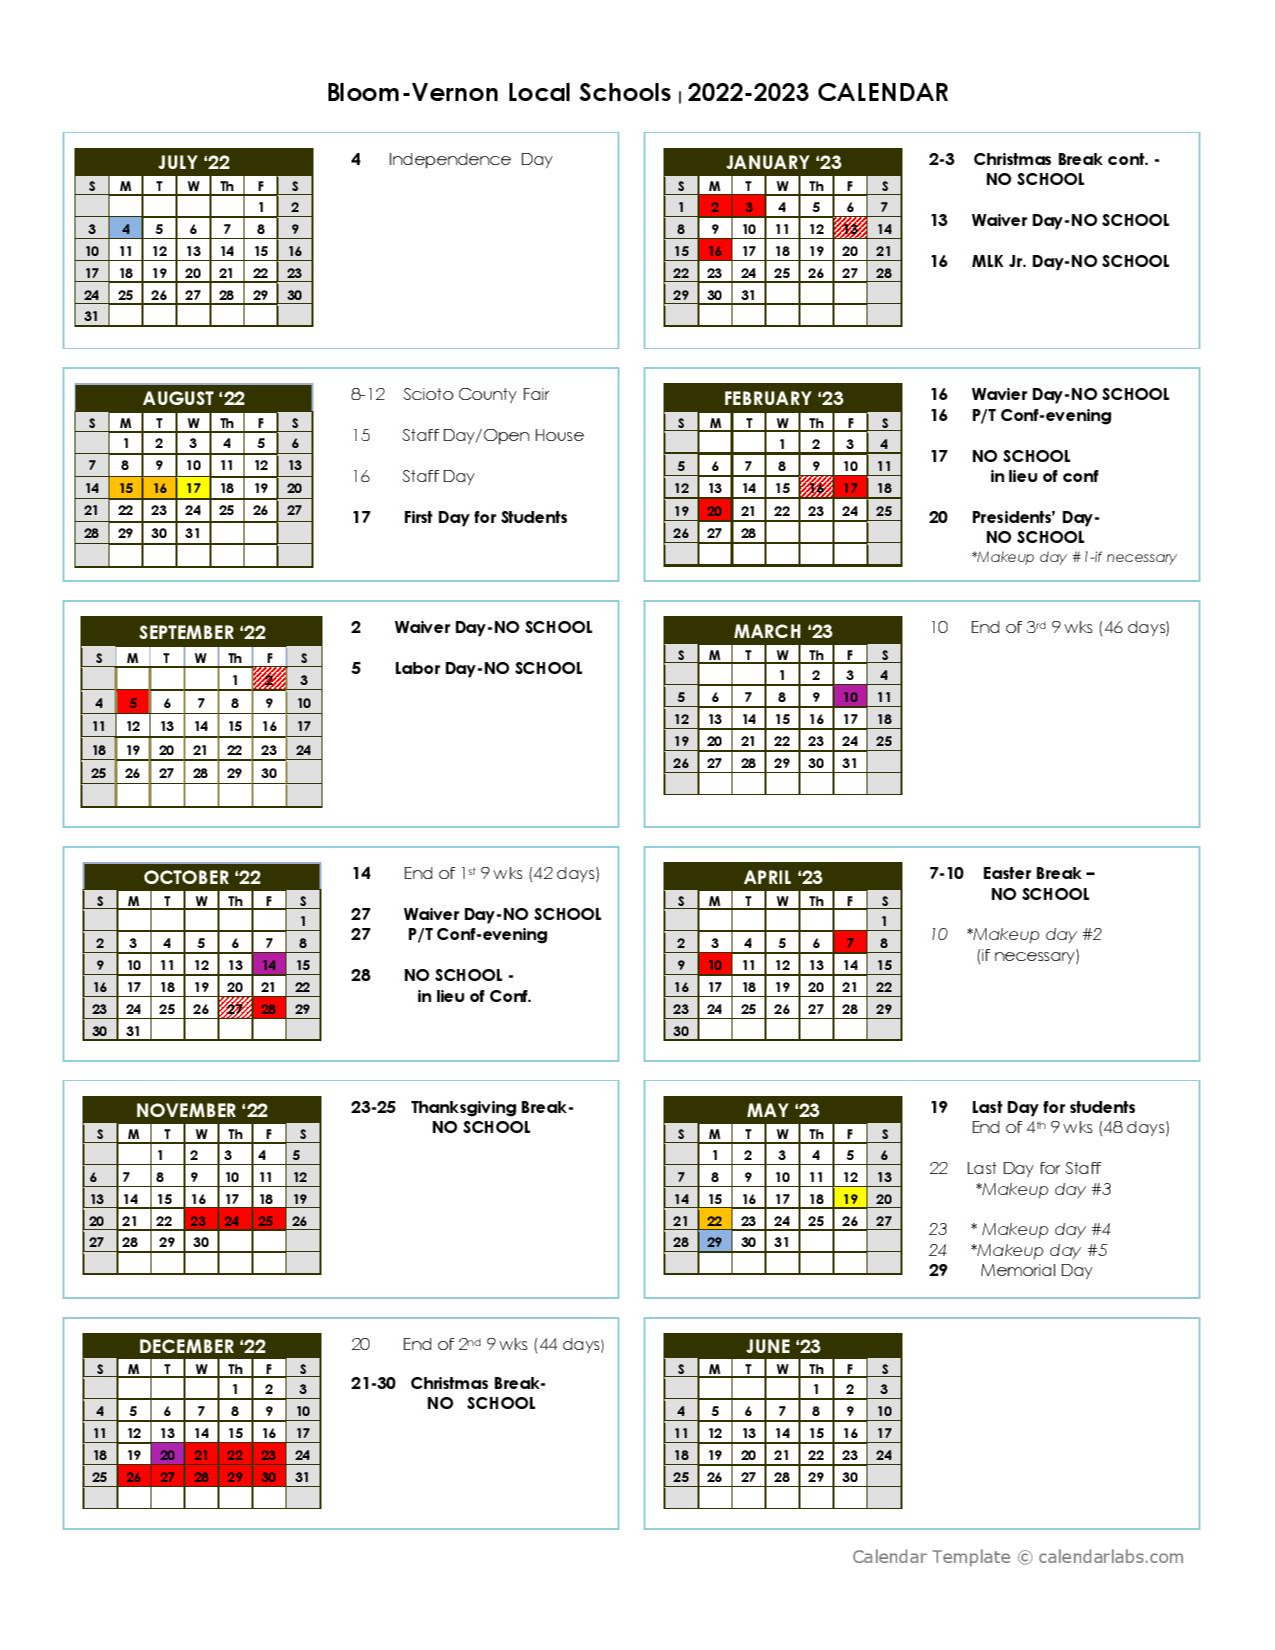 District Calendar Bloom Vernon Local Schools